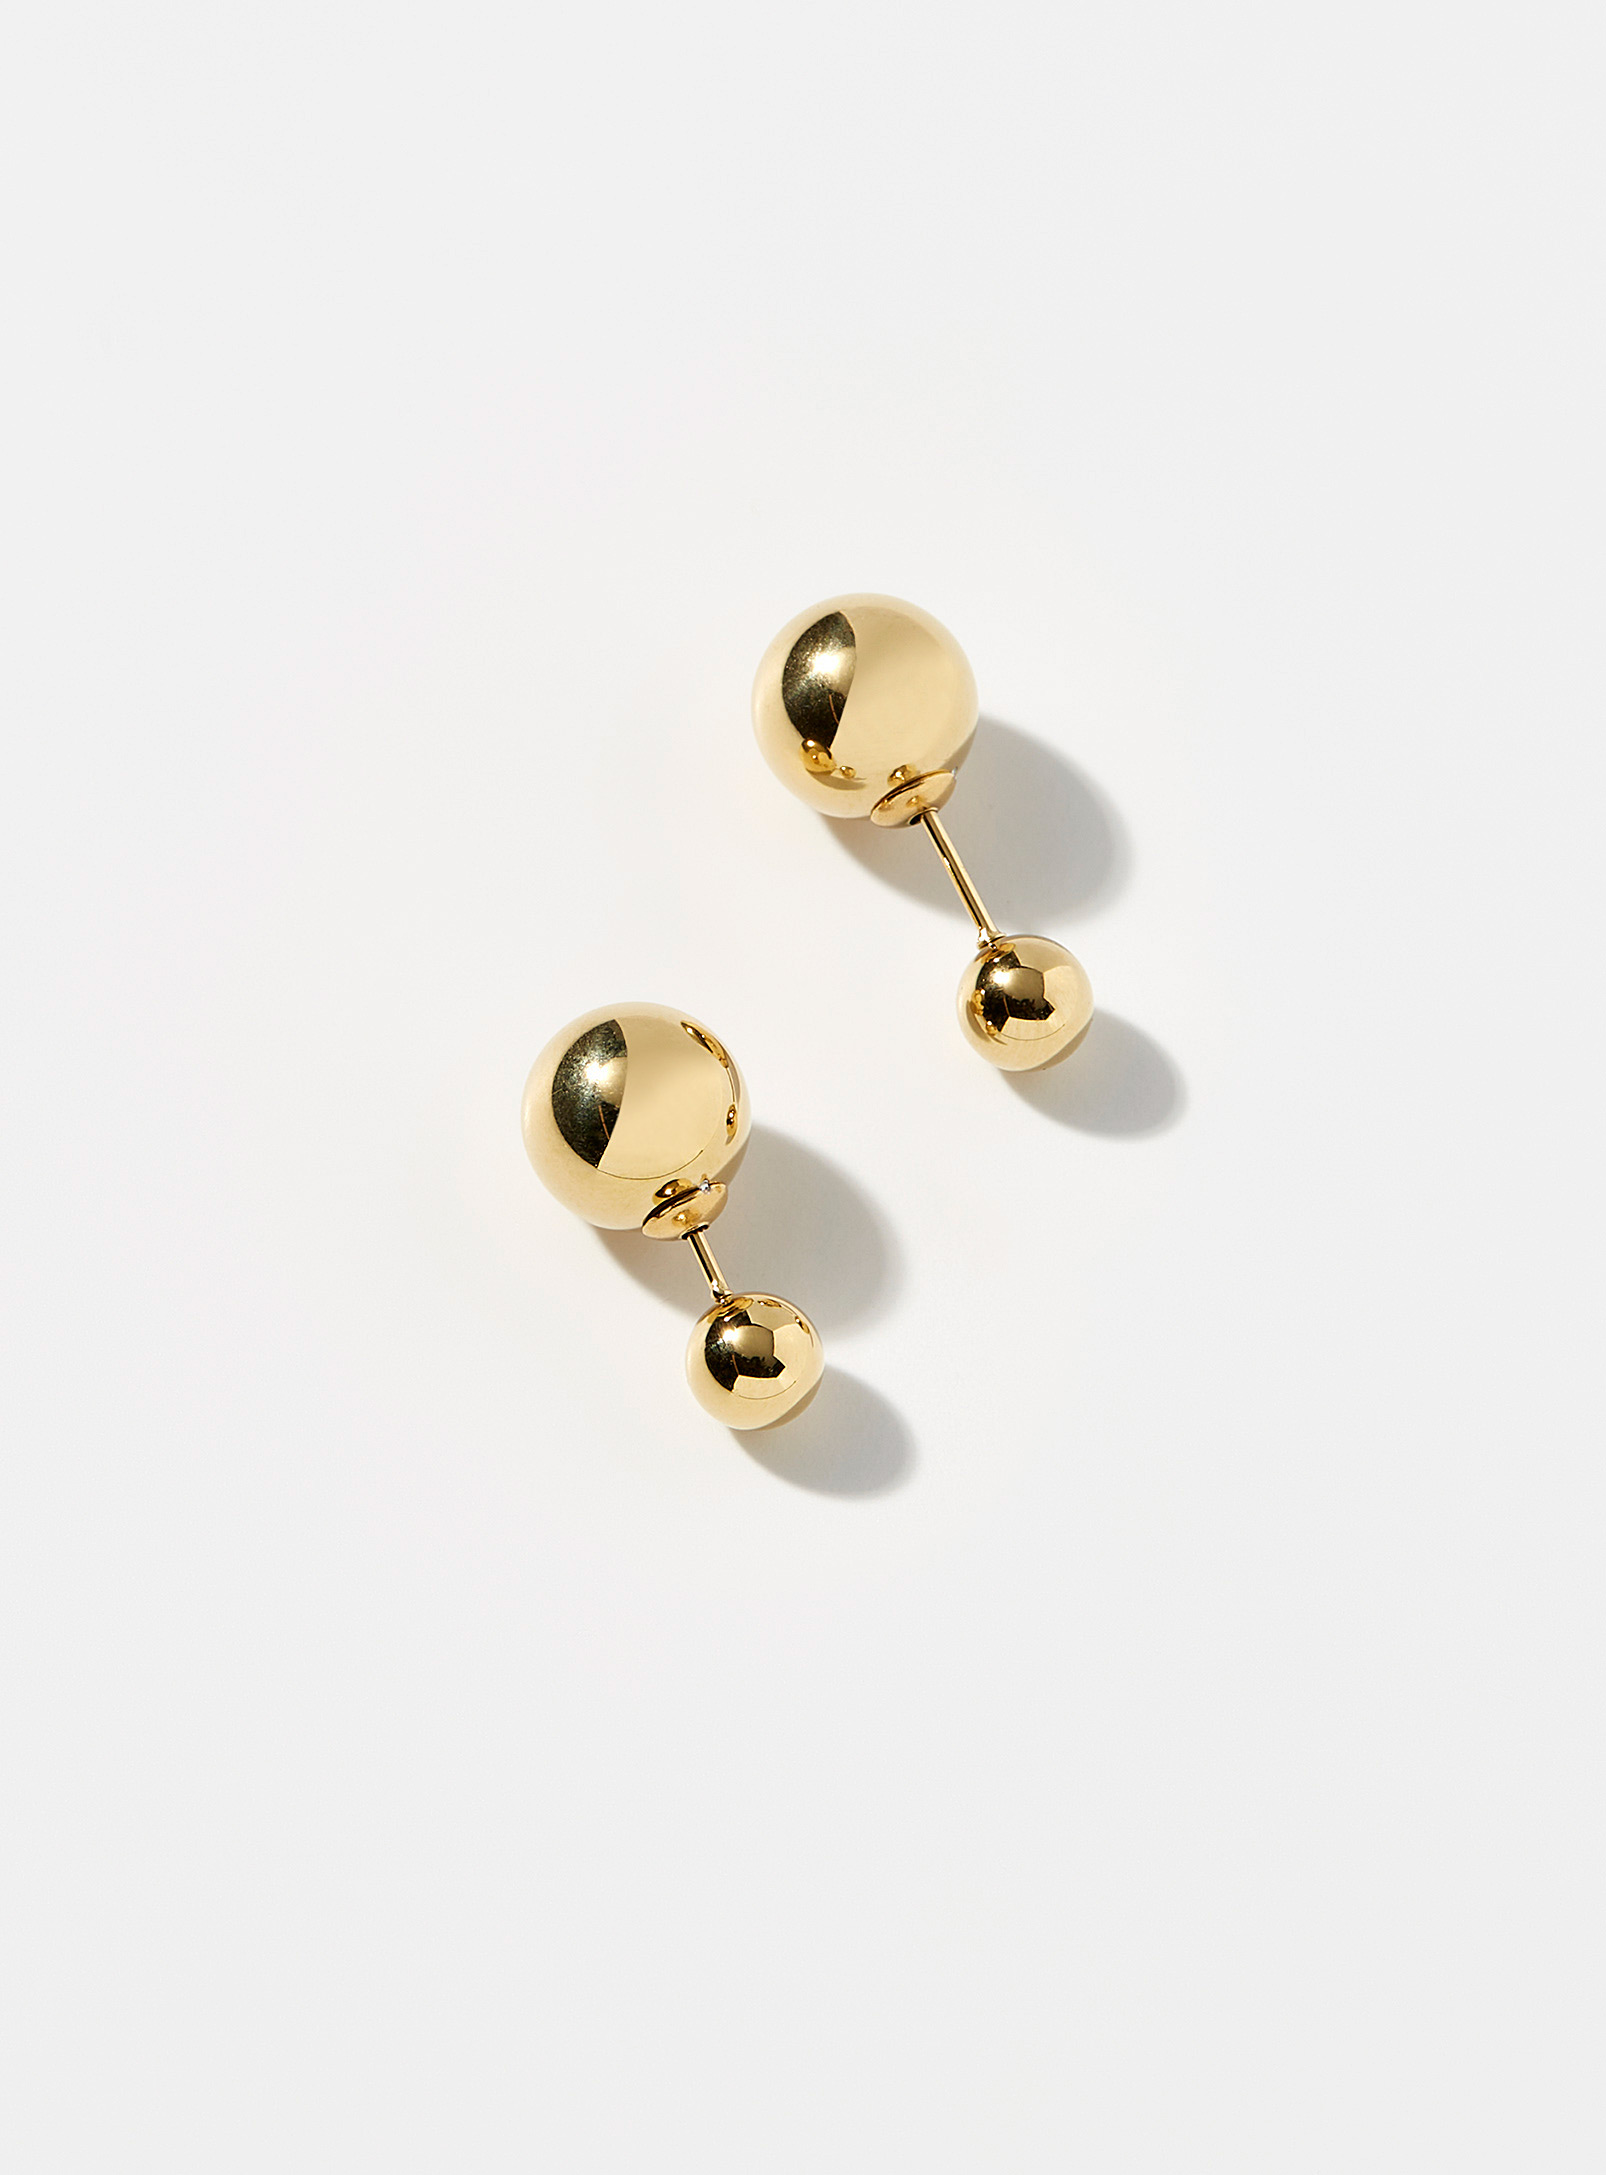 Twenty Compass - Women's Montaigne earrings